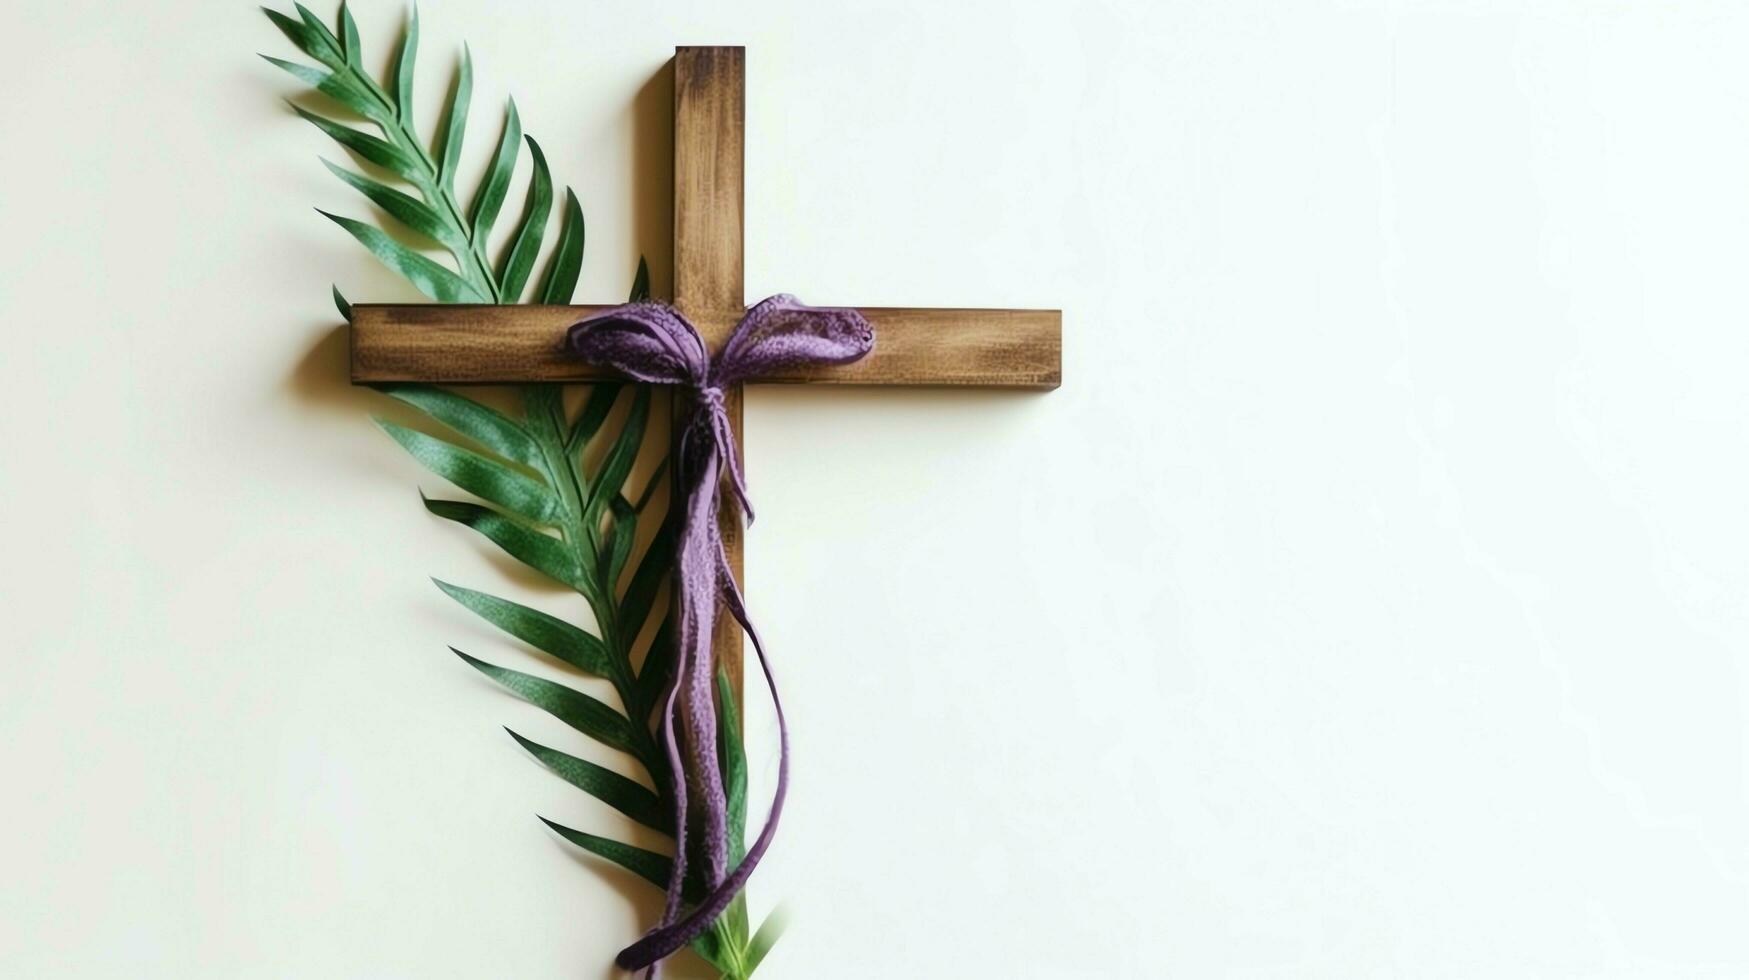 un cristiano de madera cruzar crucifijo firmar con verde palma hojas como religioso día festivo. palma domingo evento concepto por ai generado foto